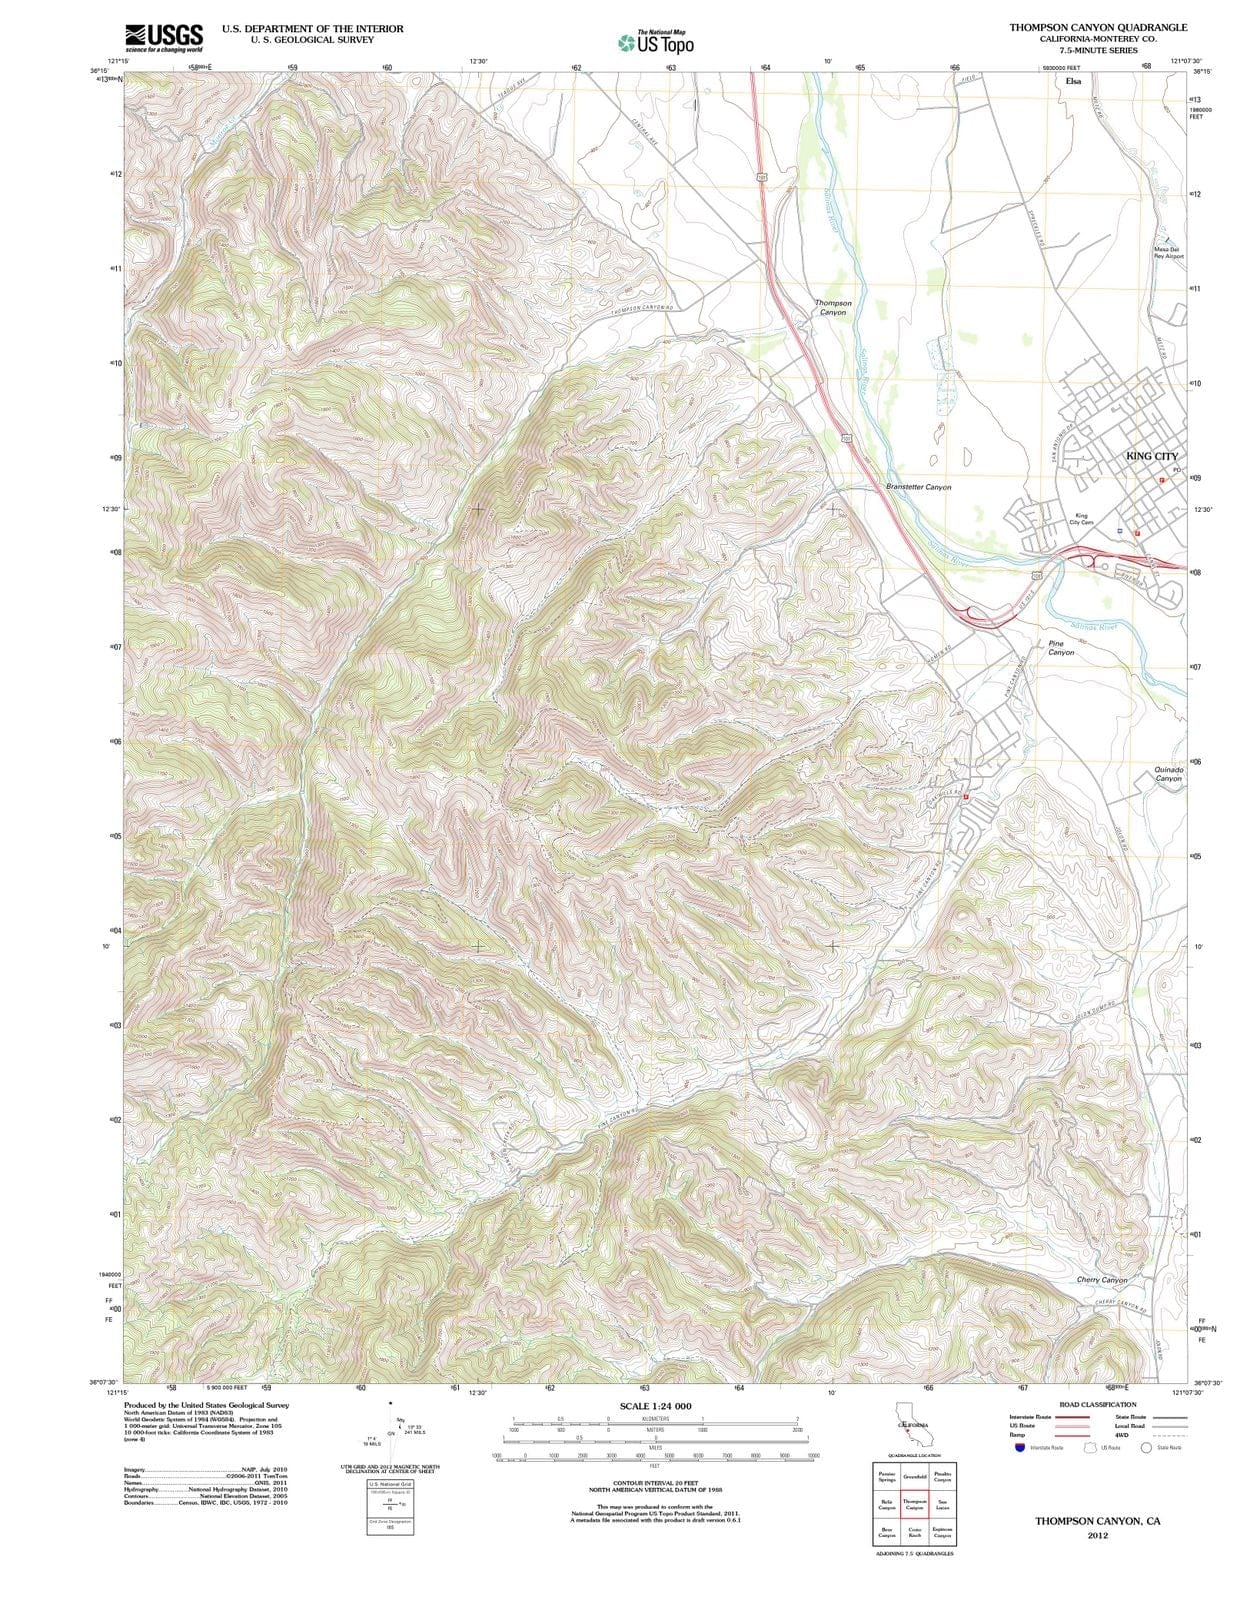 2012 Thompson Canyon, CA - California - USGS Topographic Map